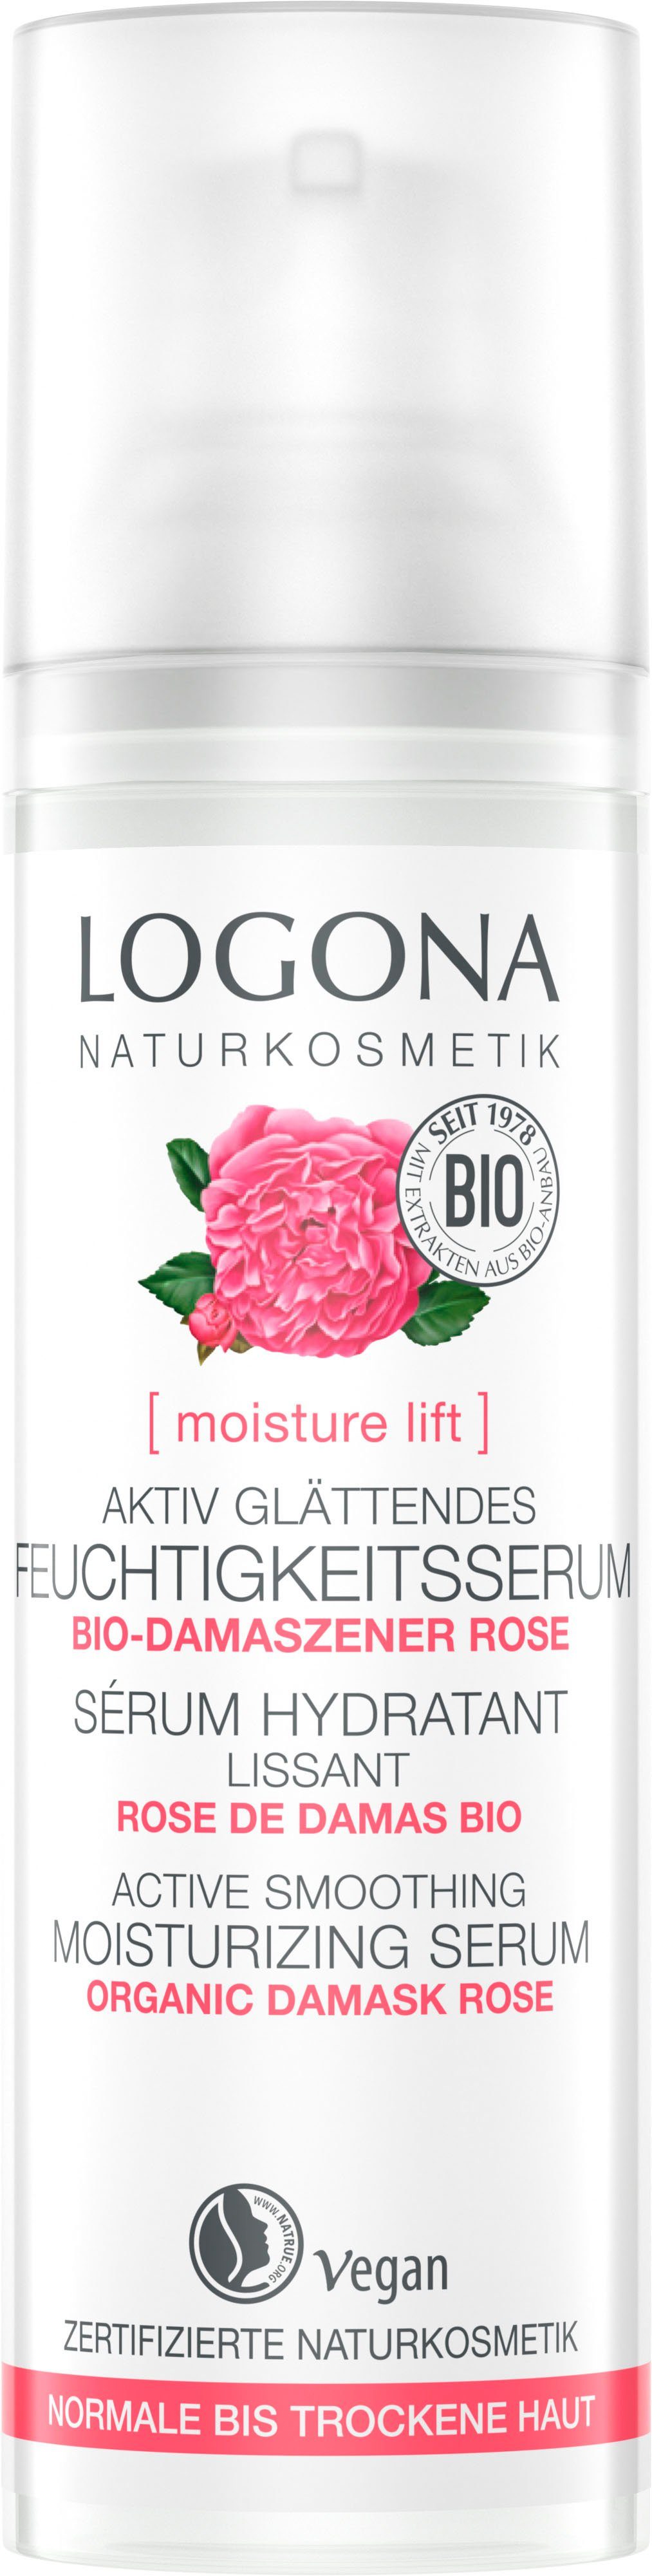 Auktion niedrigster Preis LOGONA Gesichtsserum Logona moisture Feuchtigk.serum glätt lift